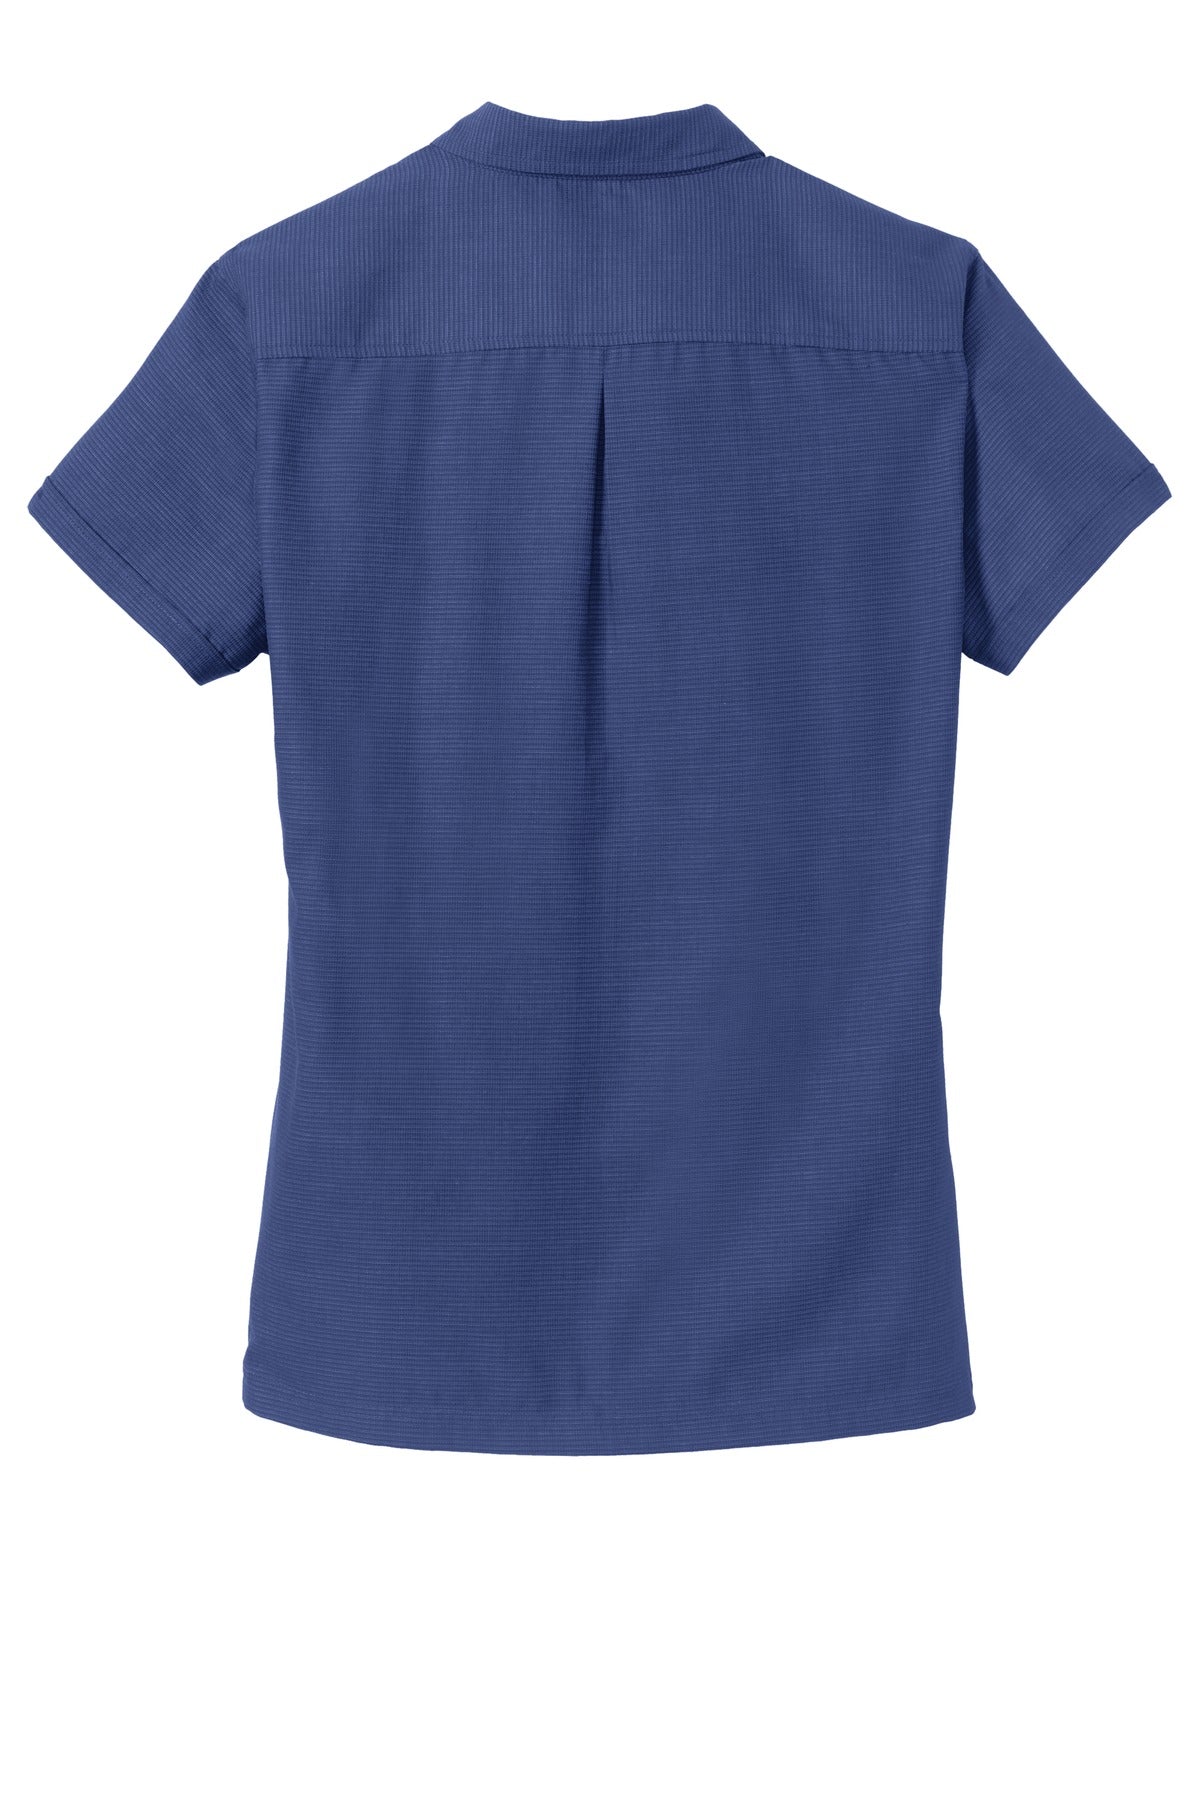 Port Authority Ladies Textured Camp Shirt. L662